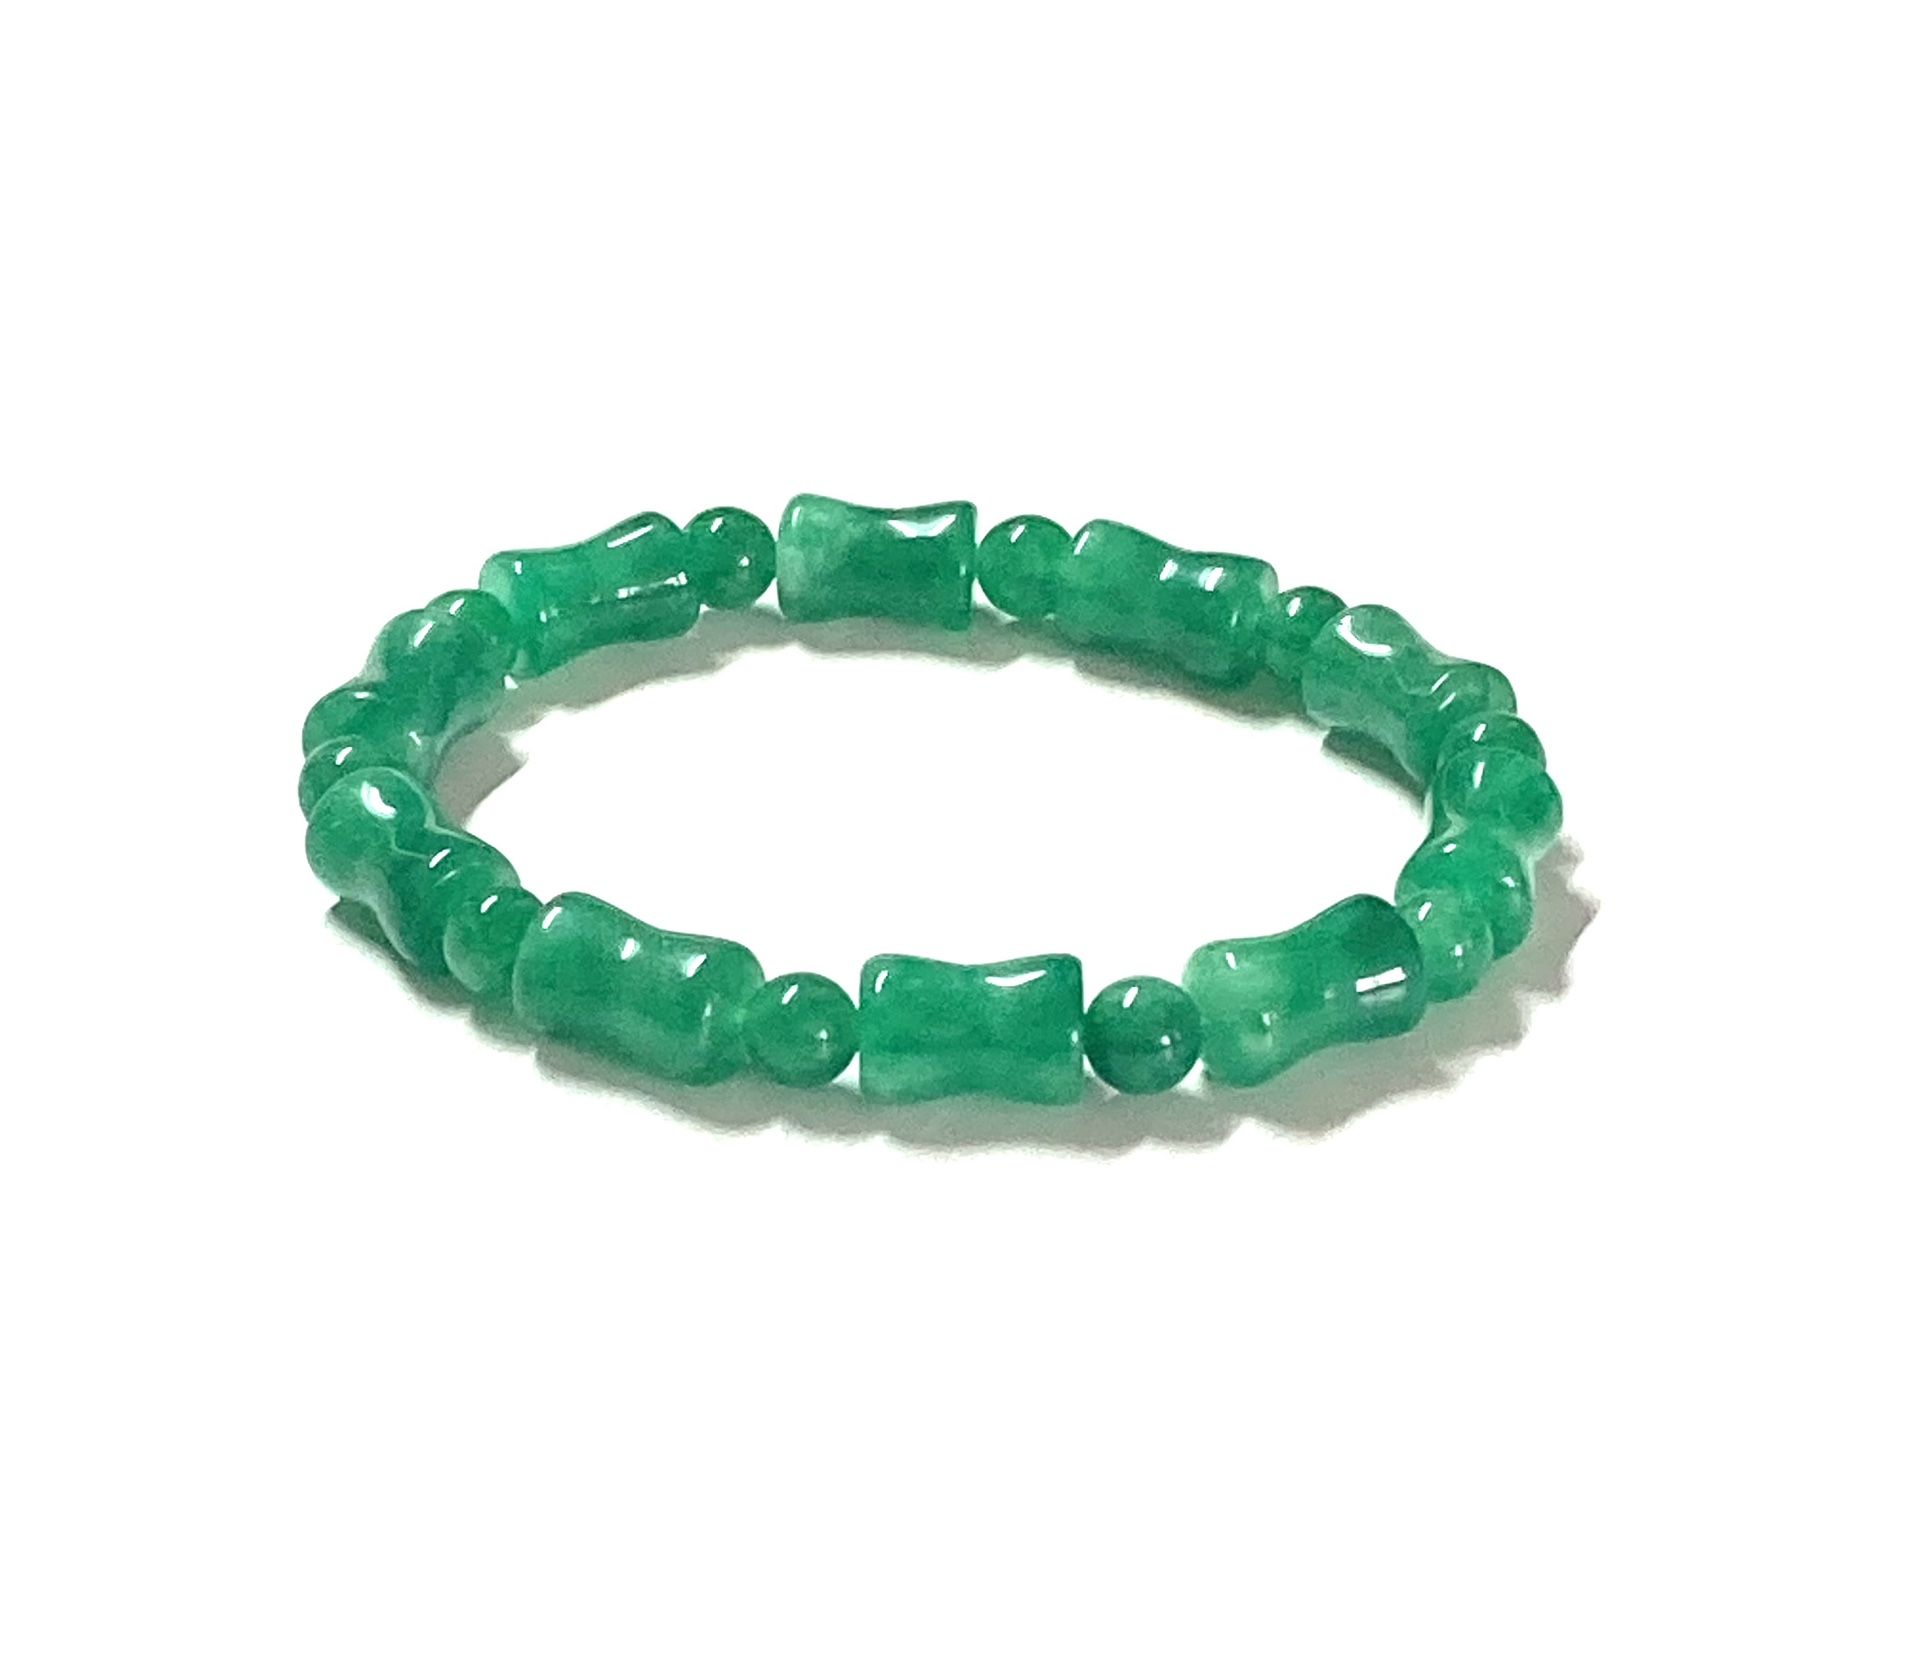 Green Jade jadeite bamboo bracelet bangle 3.5-4 inches